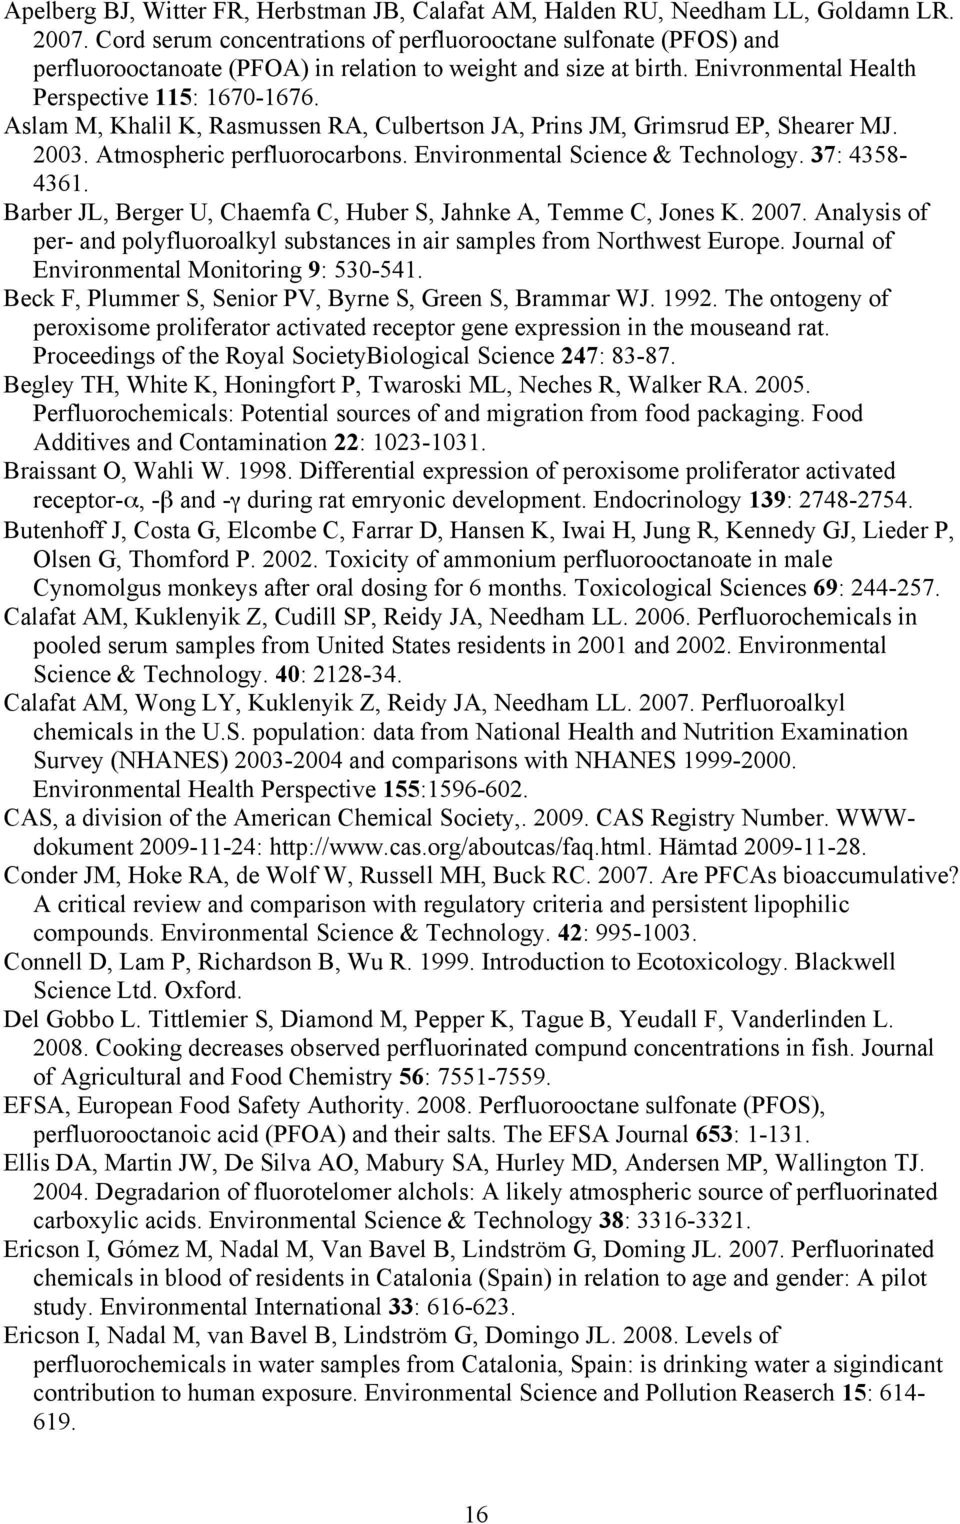 Aslam M, Khalil K, Rasmussen RA, Culbertson JA, Prins JM, Grimsrud EP, Shearer MJ. 2003. Atmospheric perfluorocarbons. Environmental Science & Technology. 37: 4358-4361.